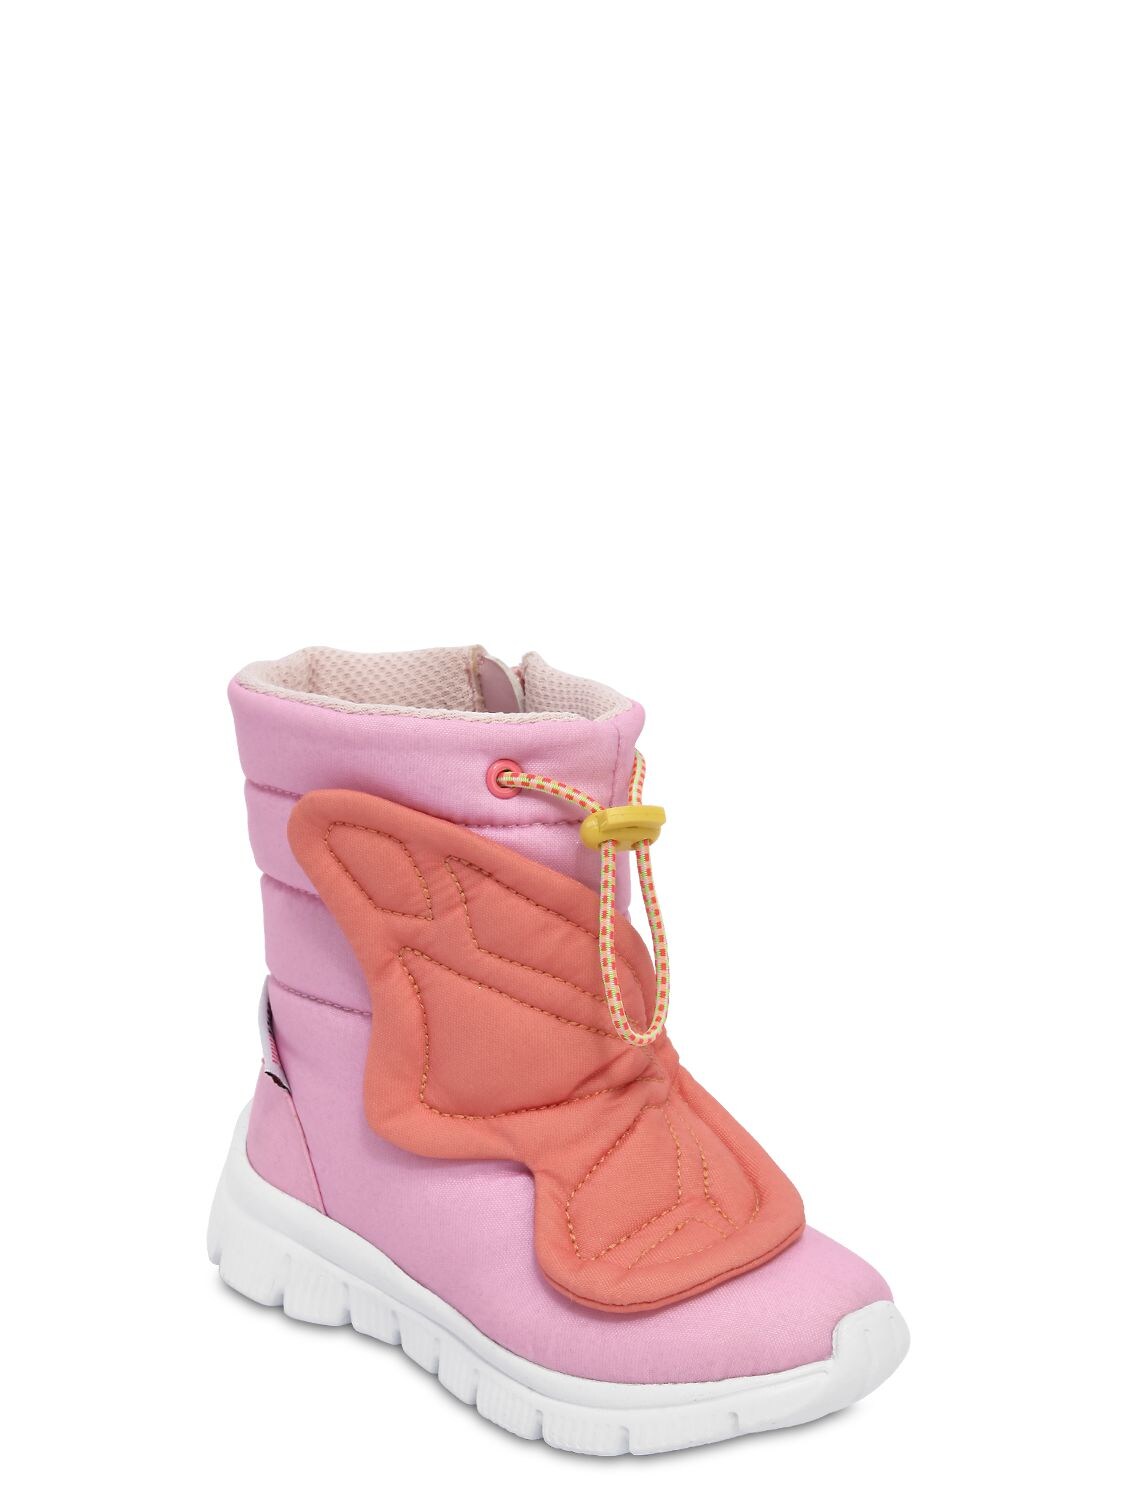 sophia webster snow boots